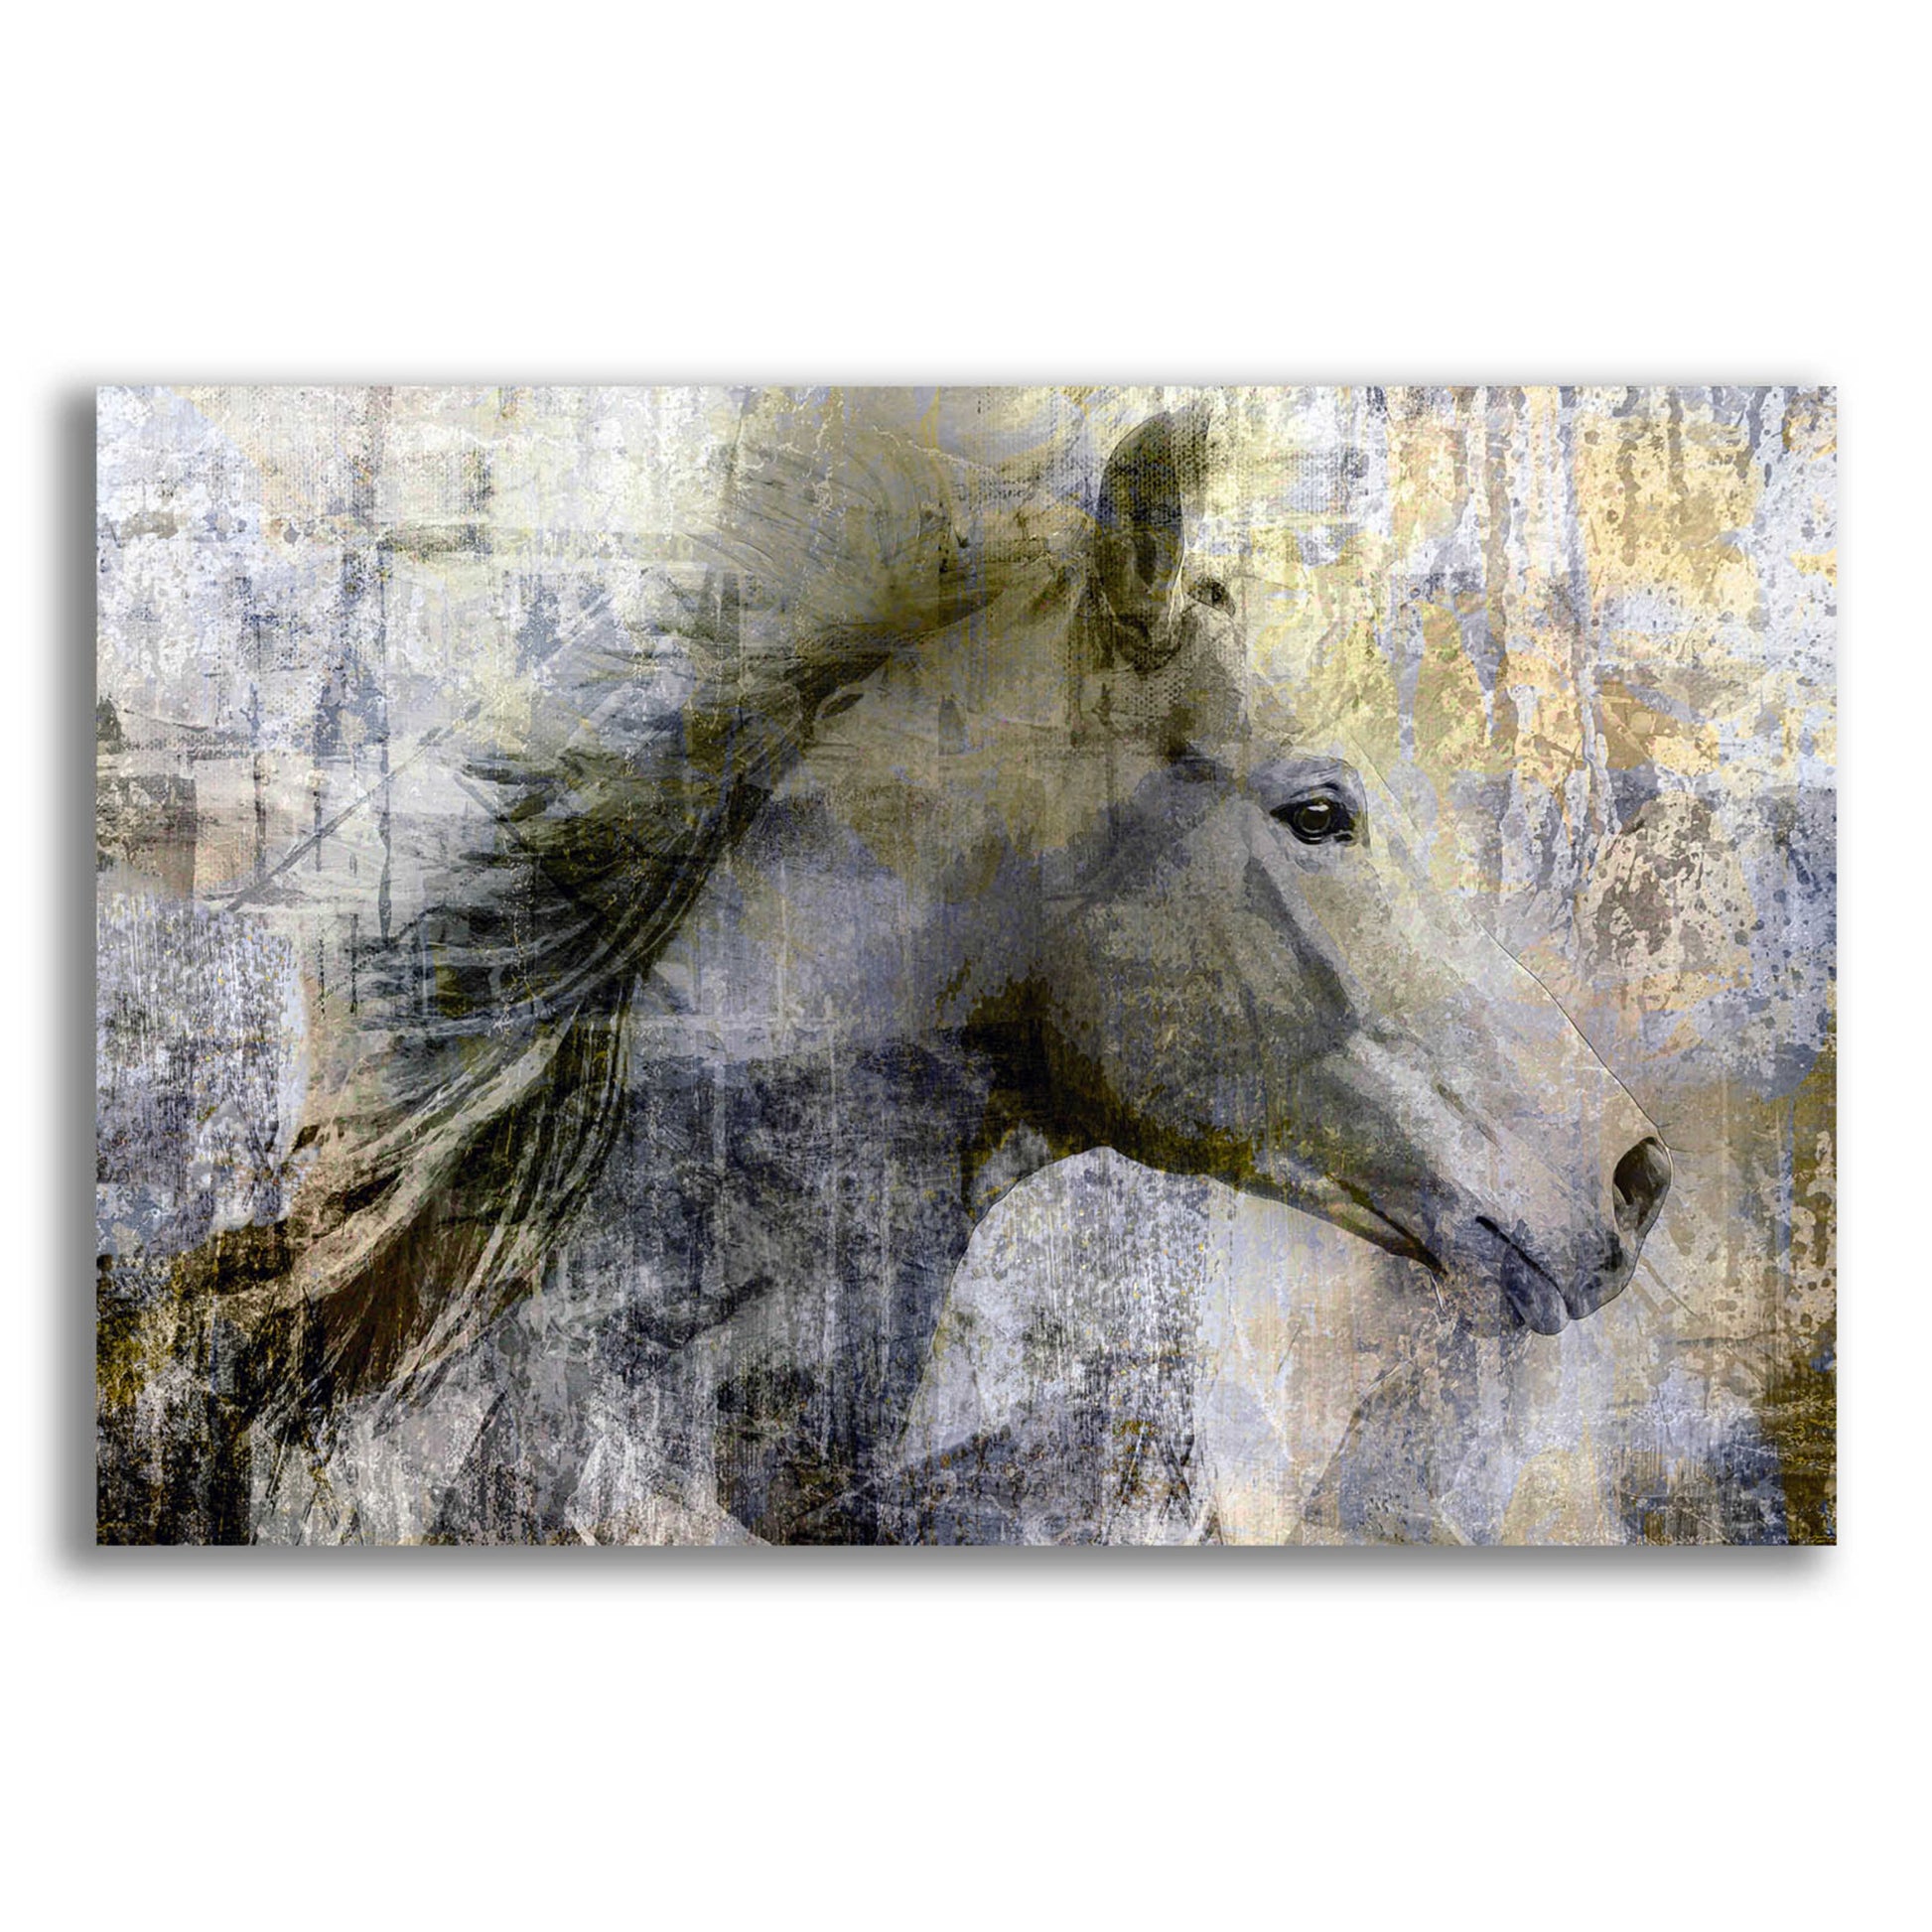 Epic Art 'Vintage Horse,' Acrylic Glass Wall Art,18x12x1.1x0,26x18x1.1x0,40x26x1.74x0,60x40x1.74x0